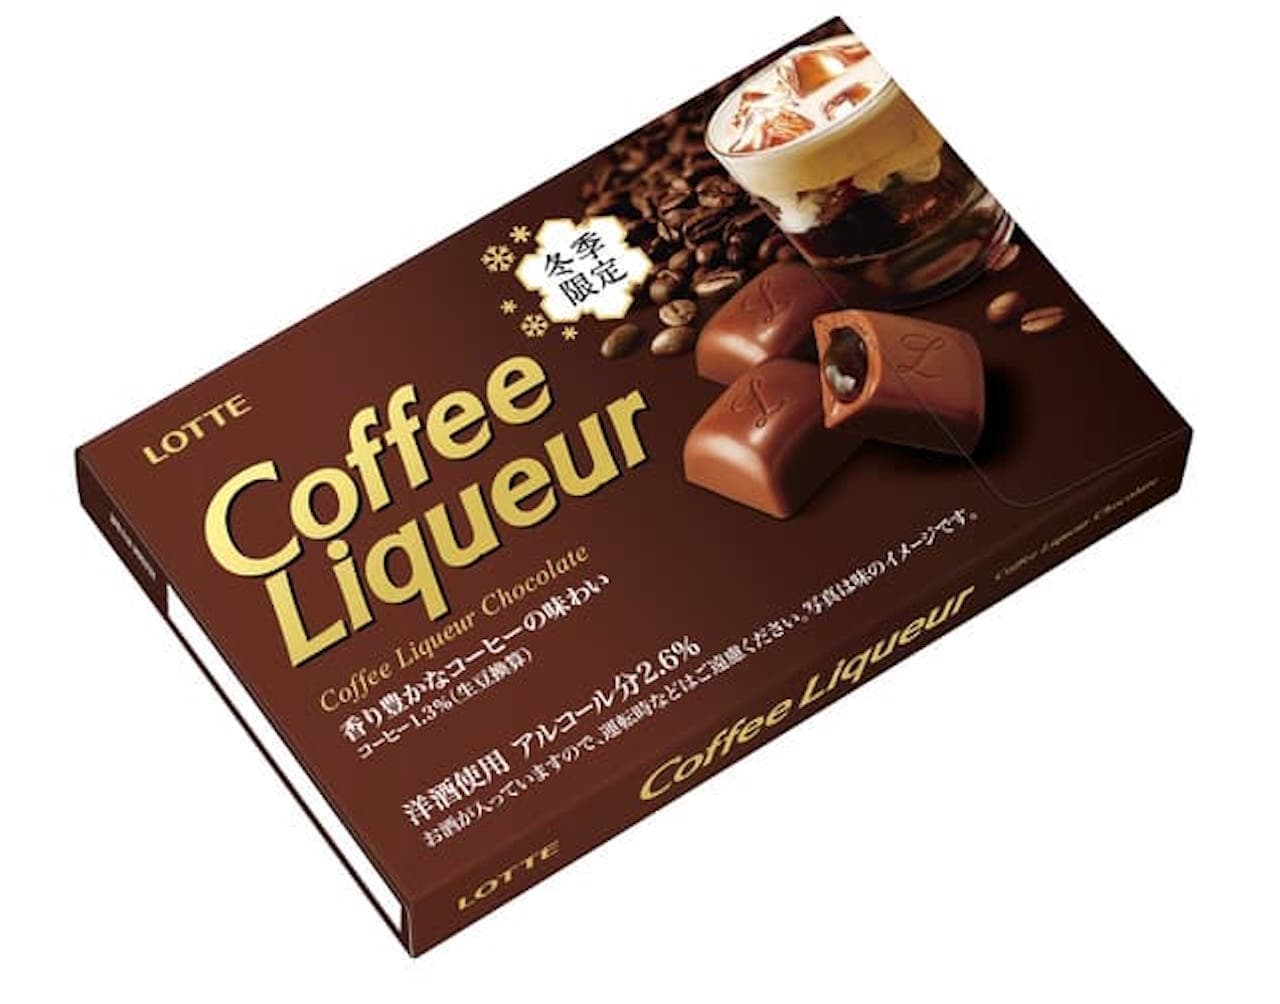 New chocolate "Coffee liqueur"